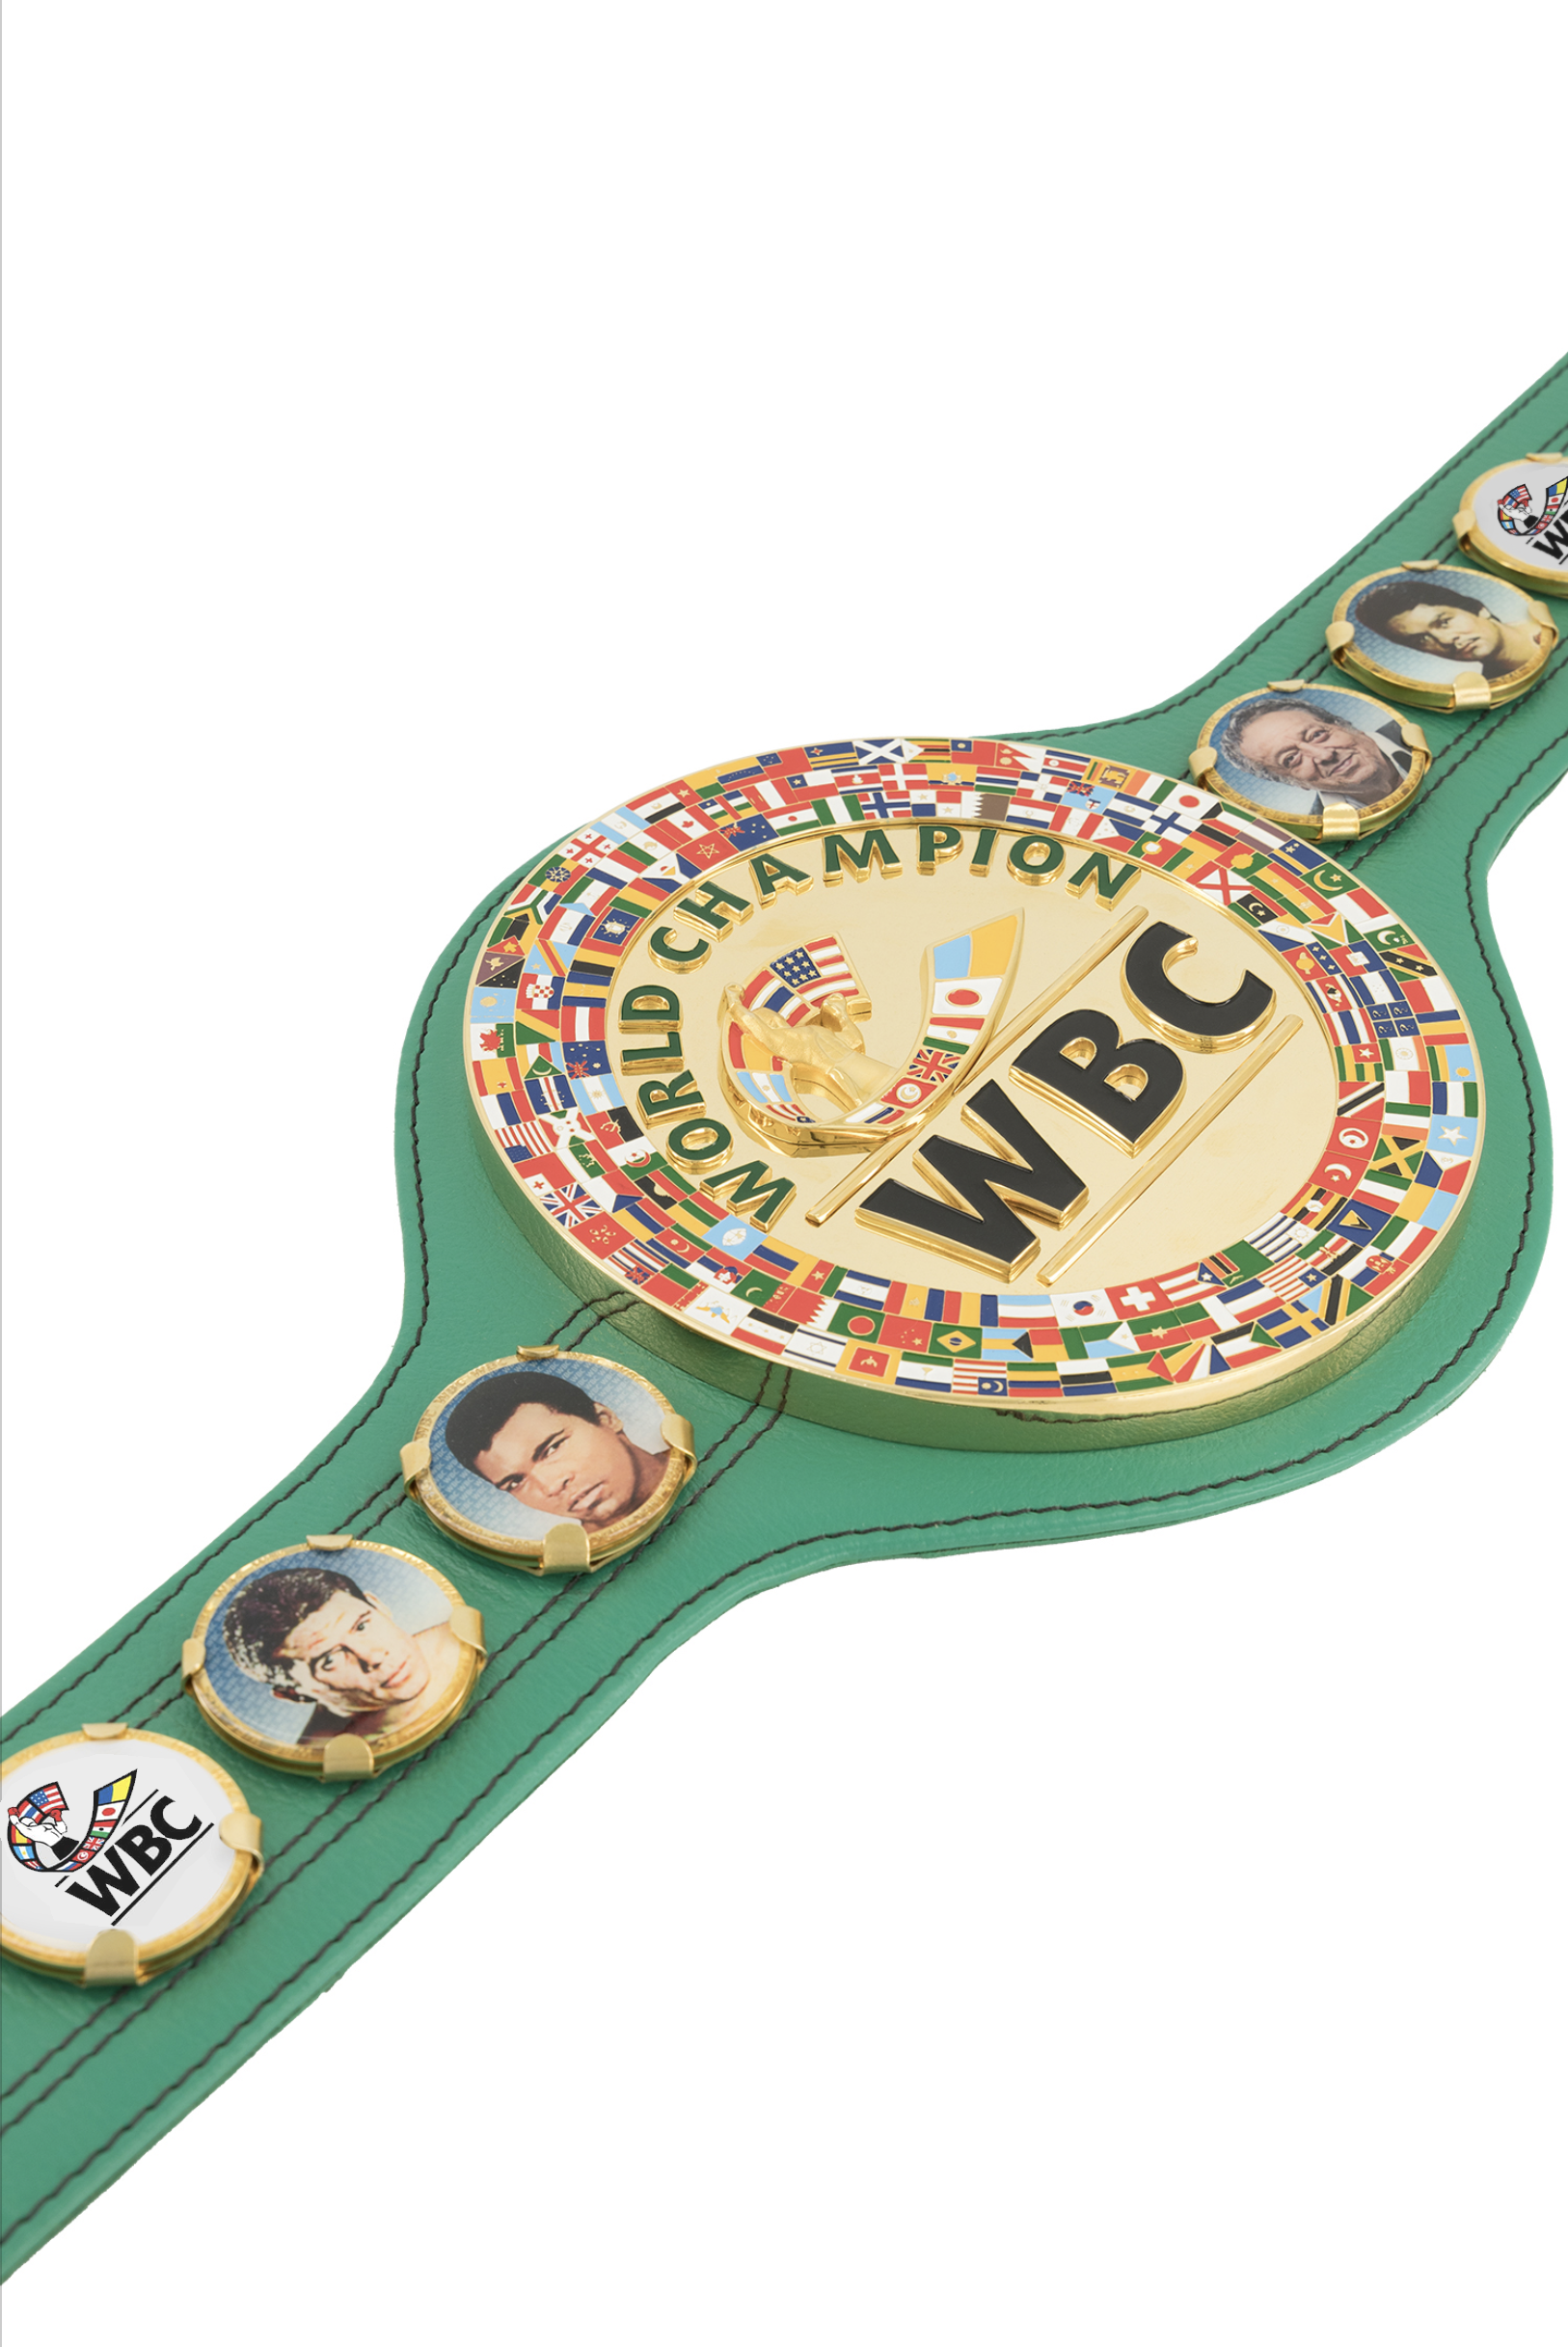 WBC Store Replica Belts WBC Replica Championship Belt Memorabilia Roberto Duran and Julio César Chávez